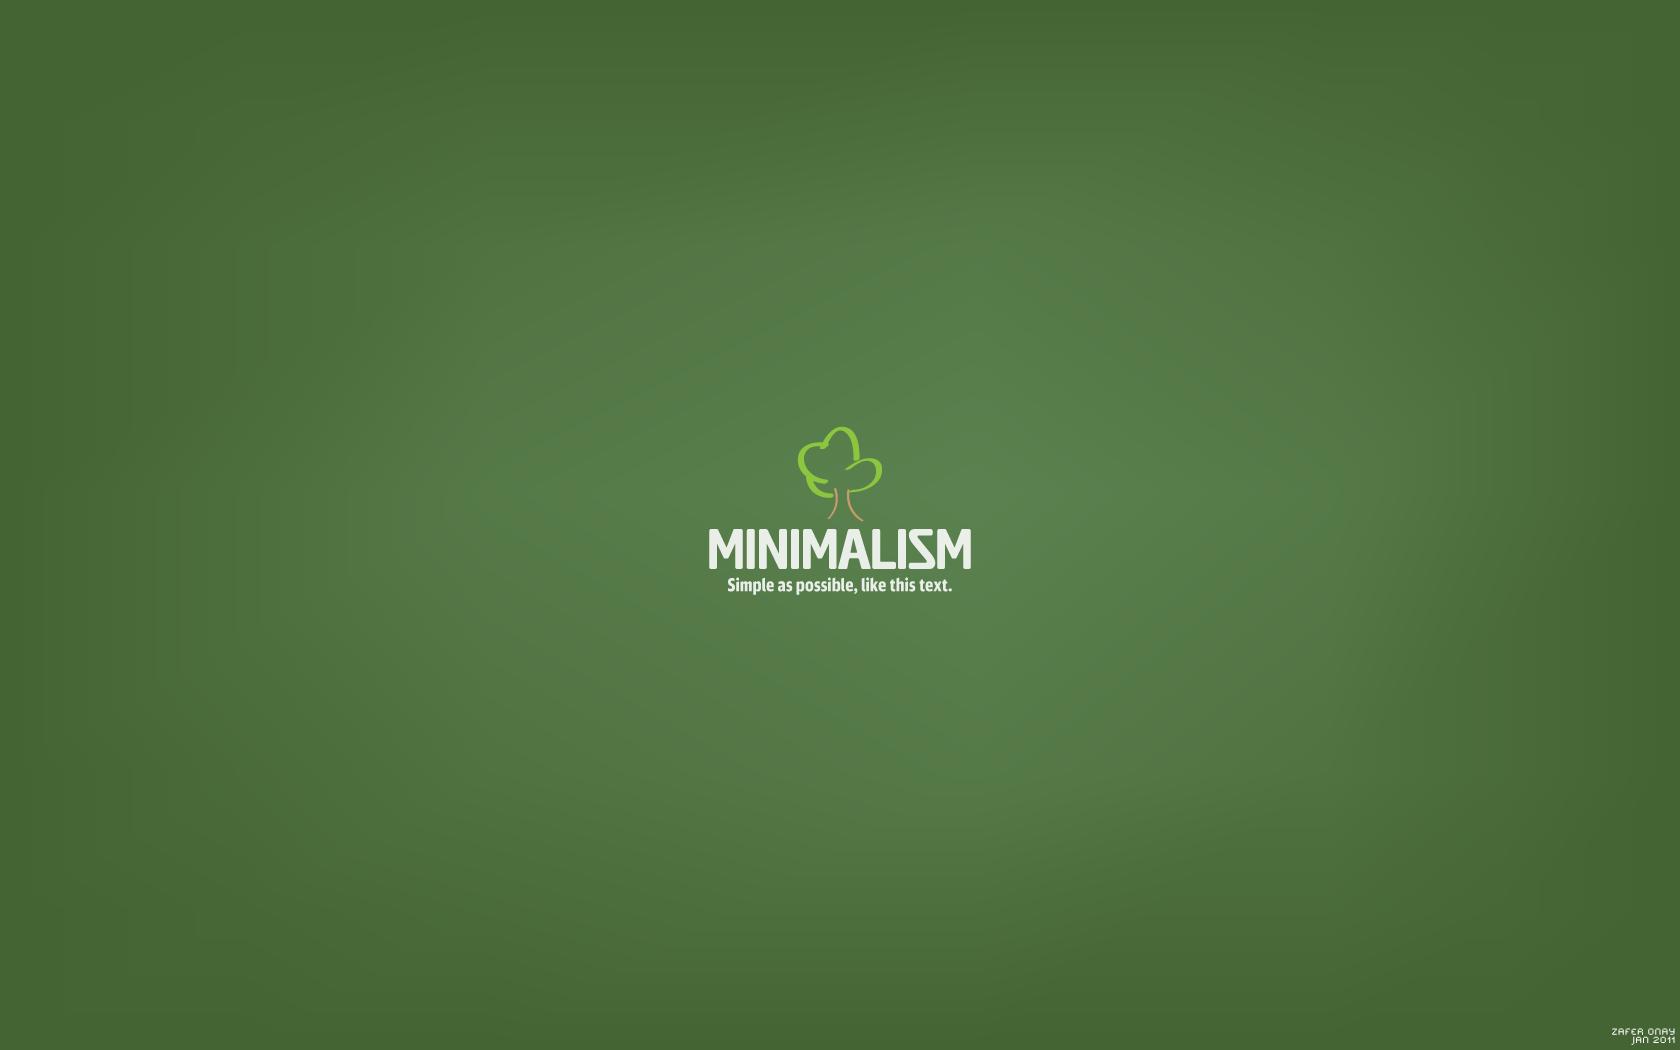 Minimalism wallpapers Minimalism stock photos